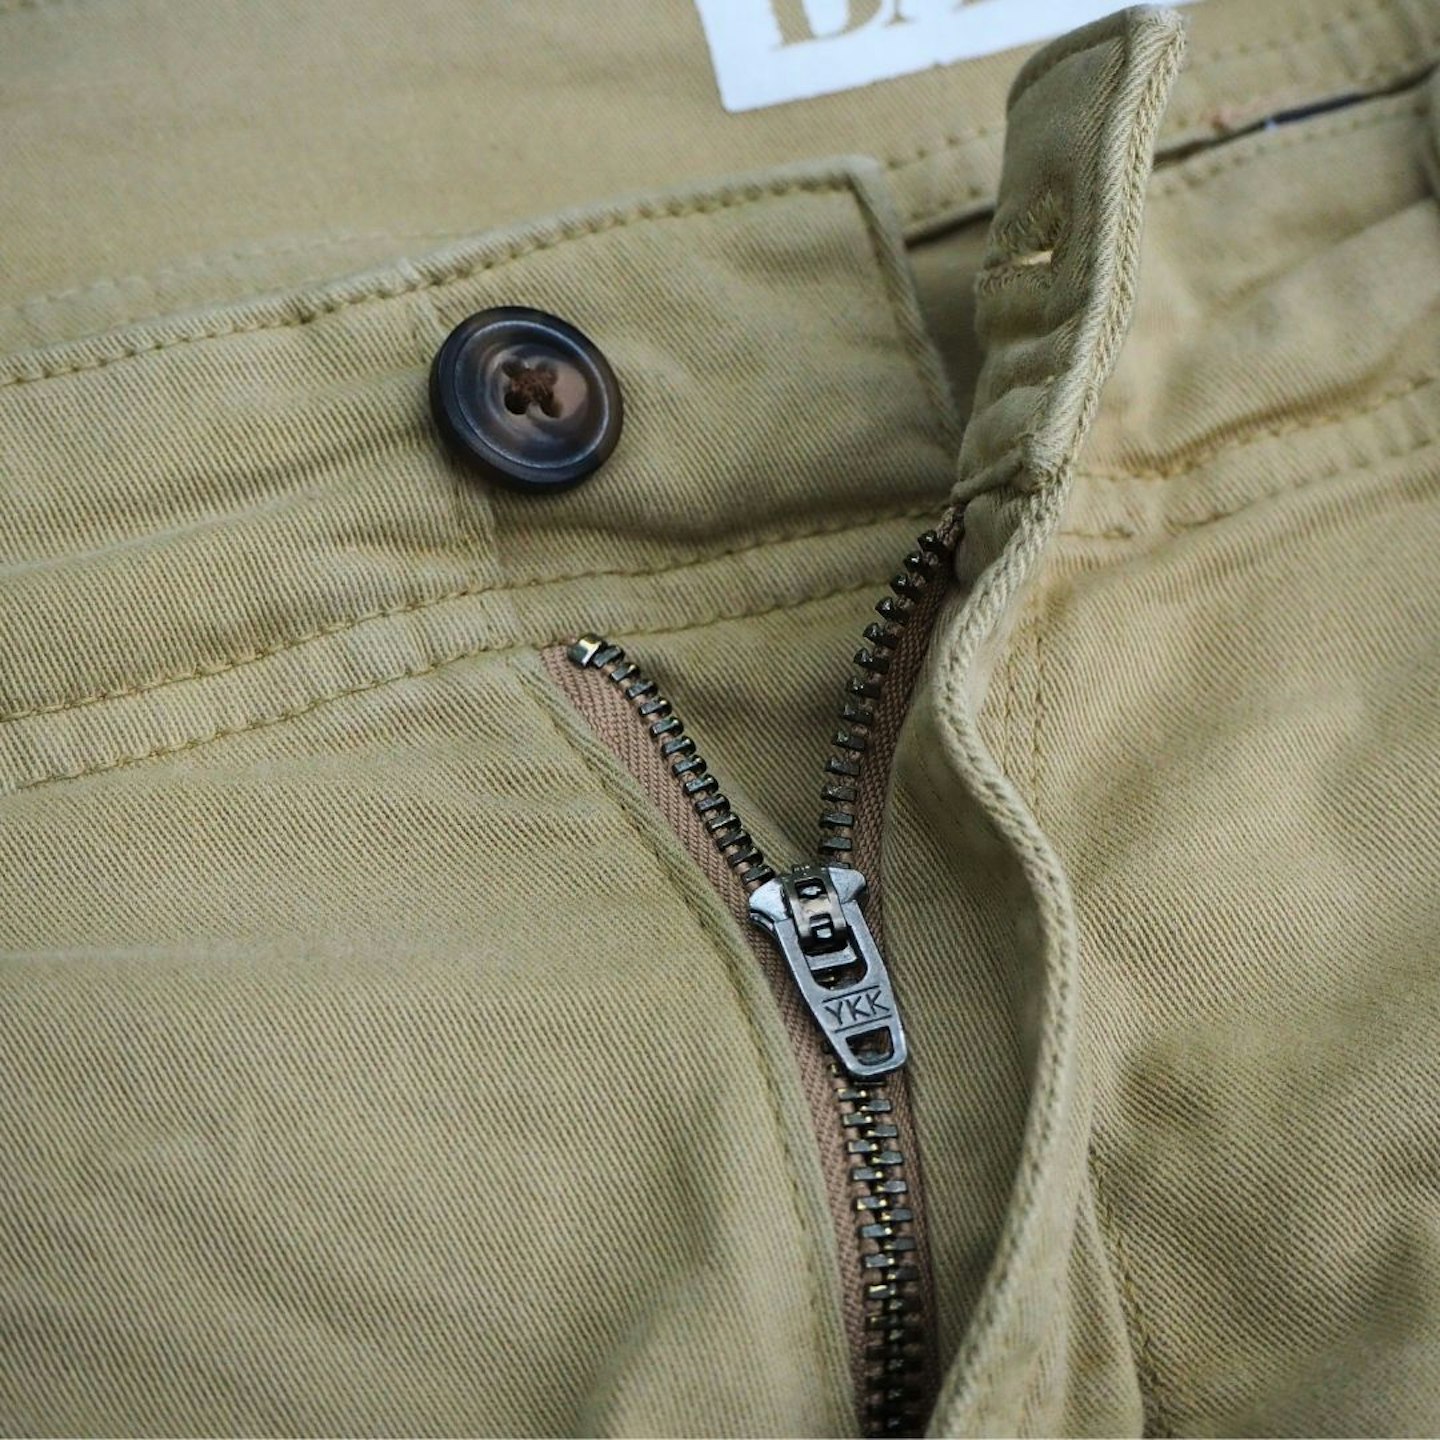 Closeup of BAM Leam Organic Cotton Cargo Shorts button and fly